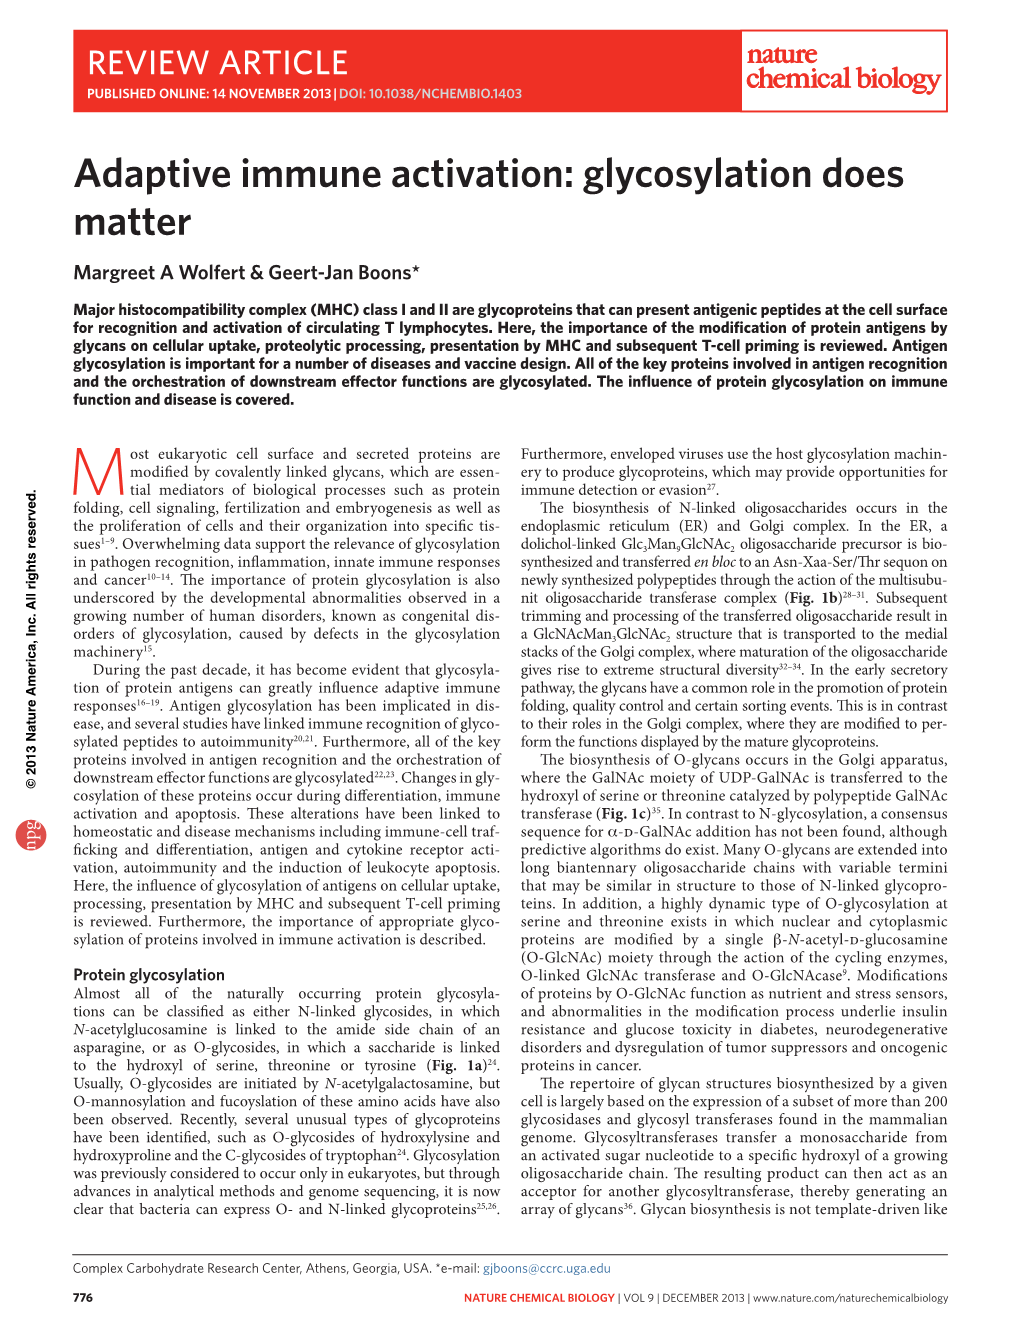 Adaptive Immune Activation: Glycosylation Does Matter